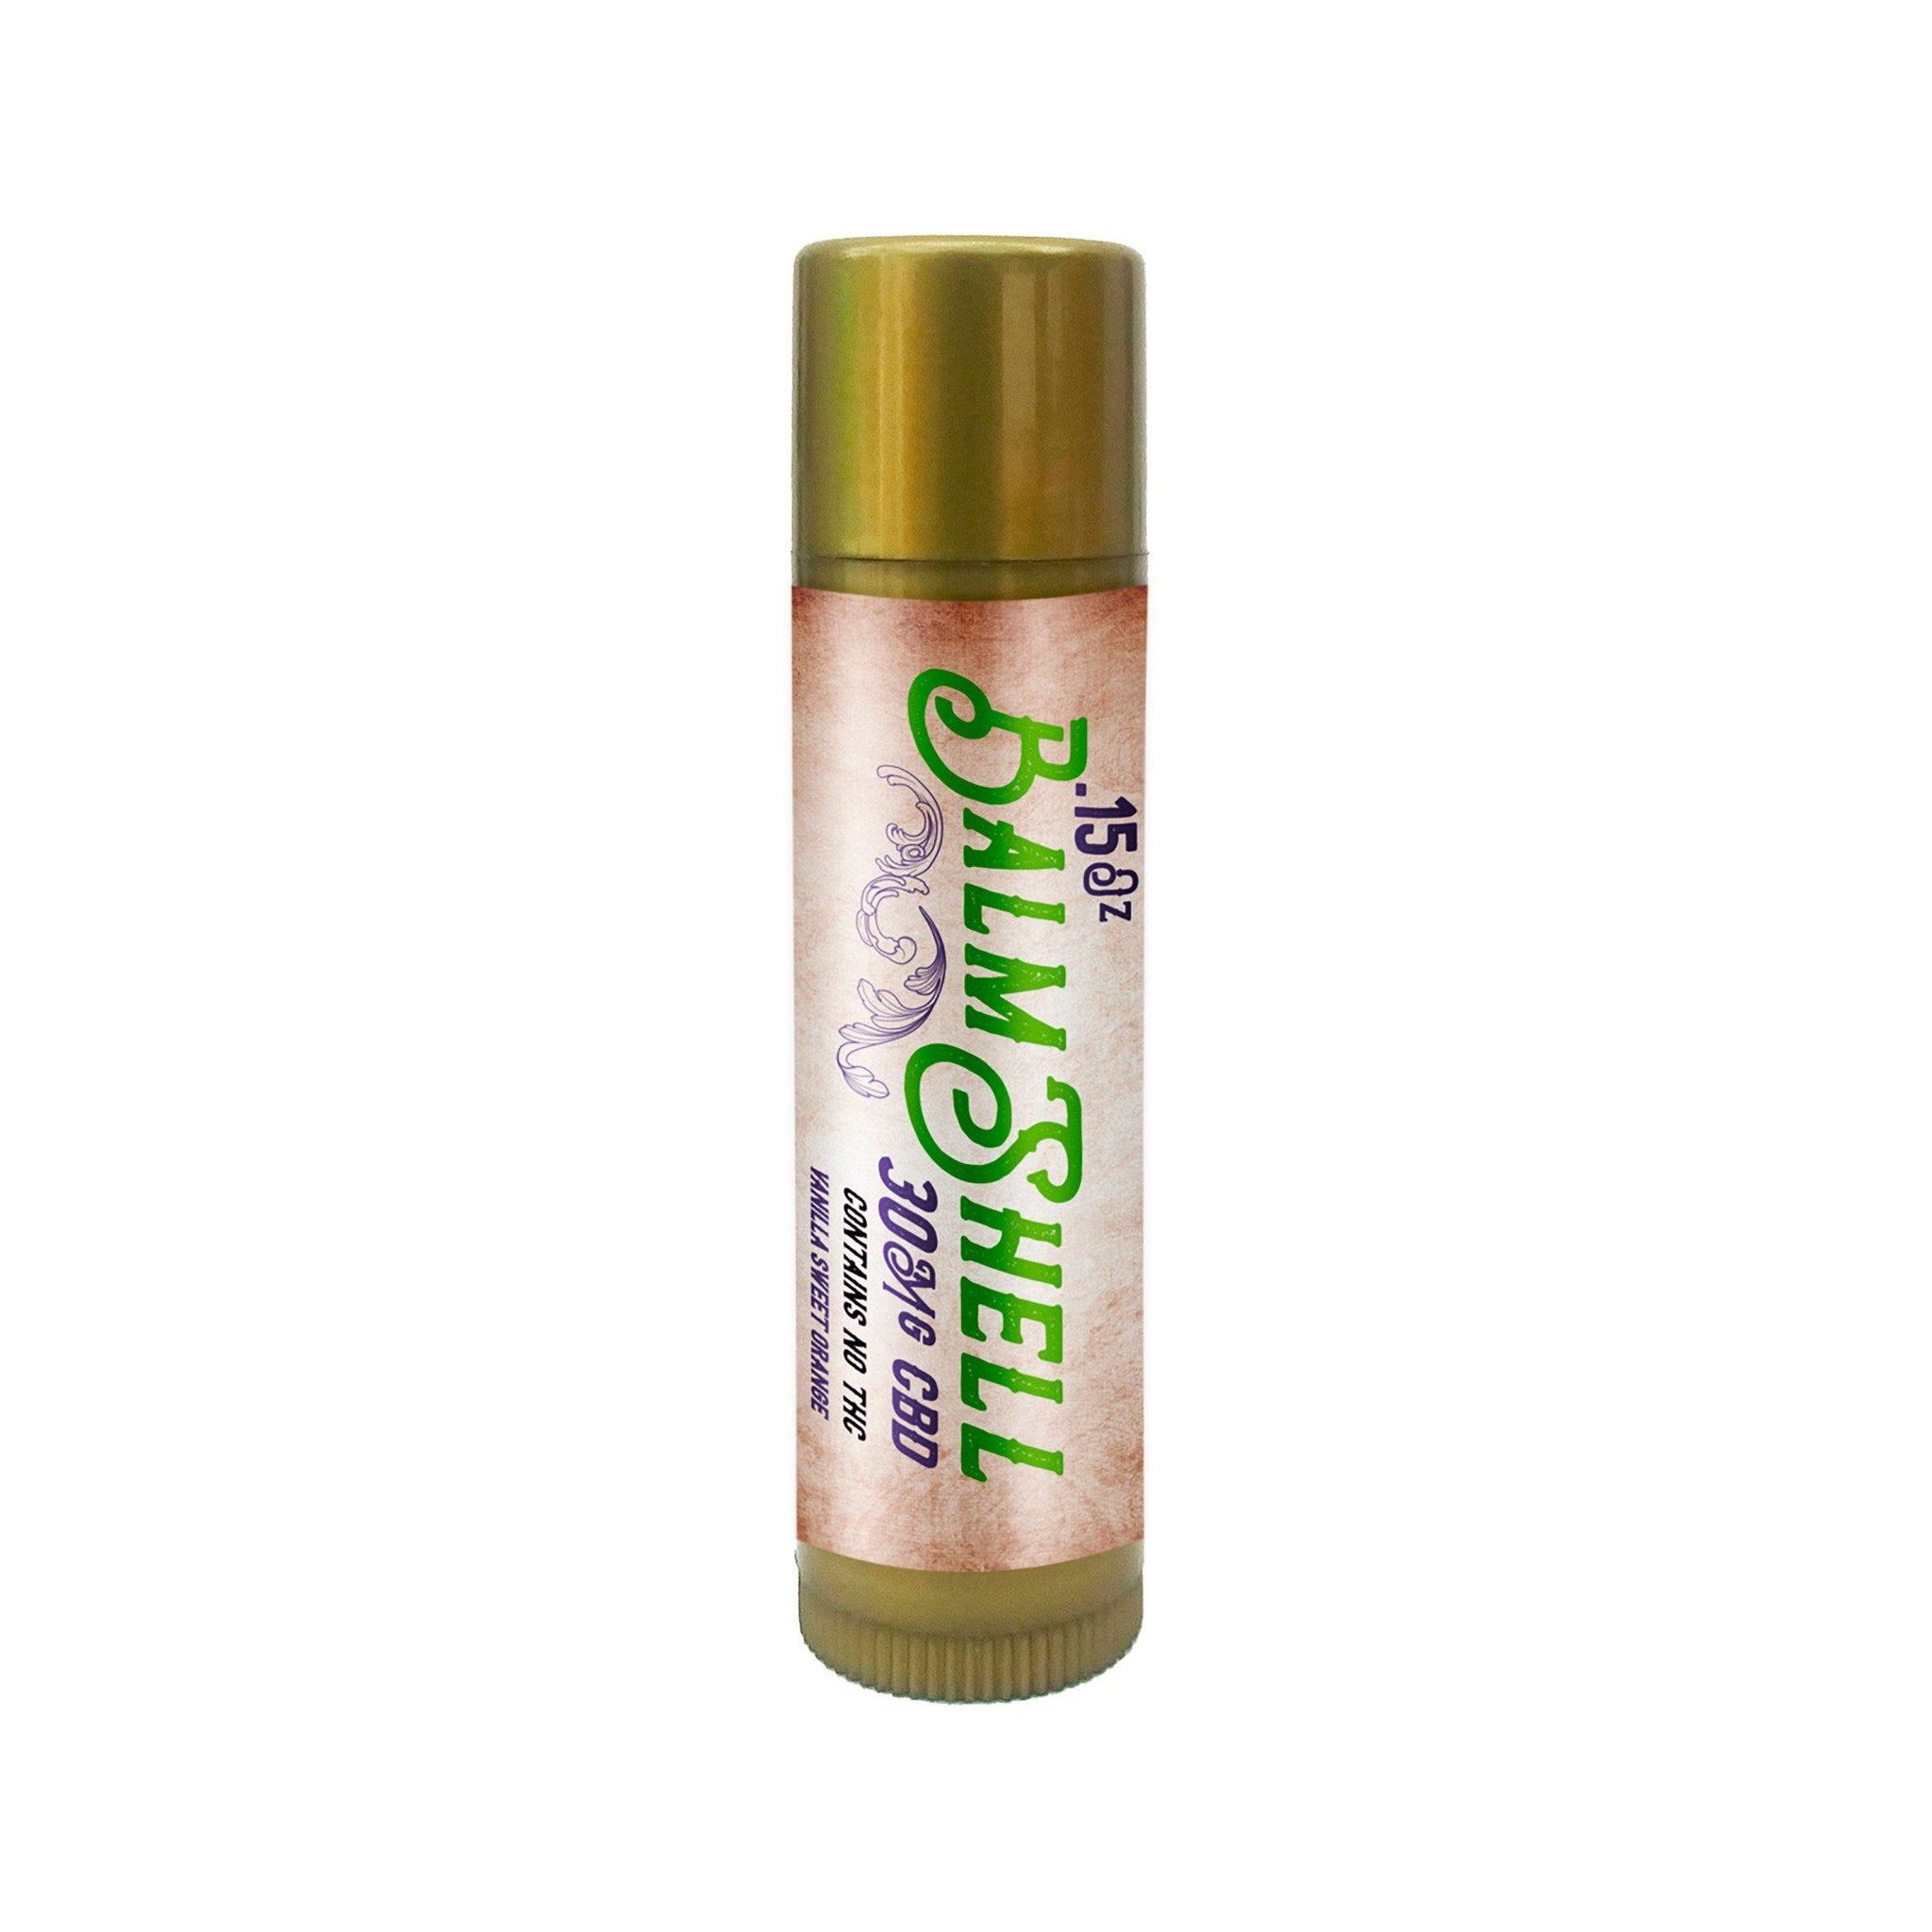 Balmshell lip balm 30mg Broad Spectrum Hemp Oil, Sweet Orange and Vanilla - The Farmacy